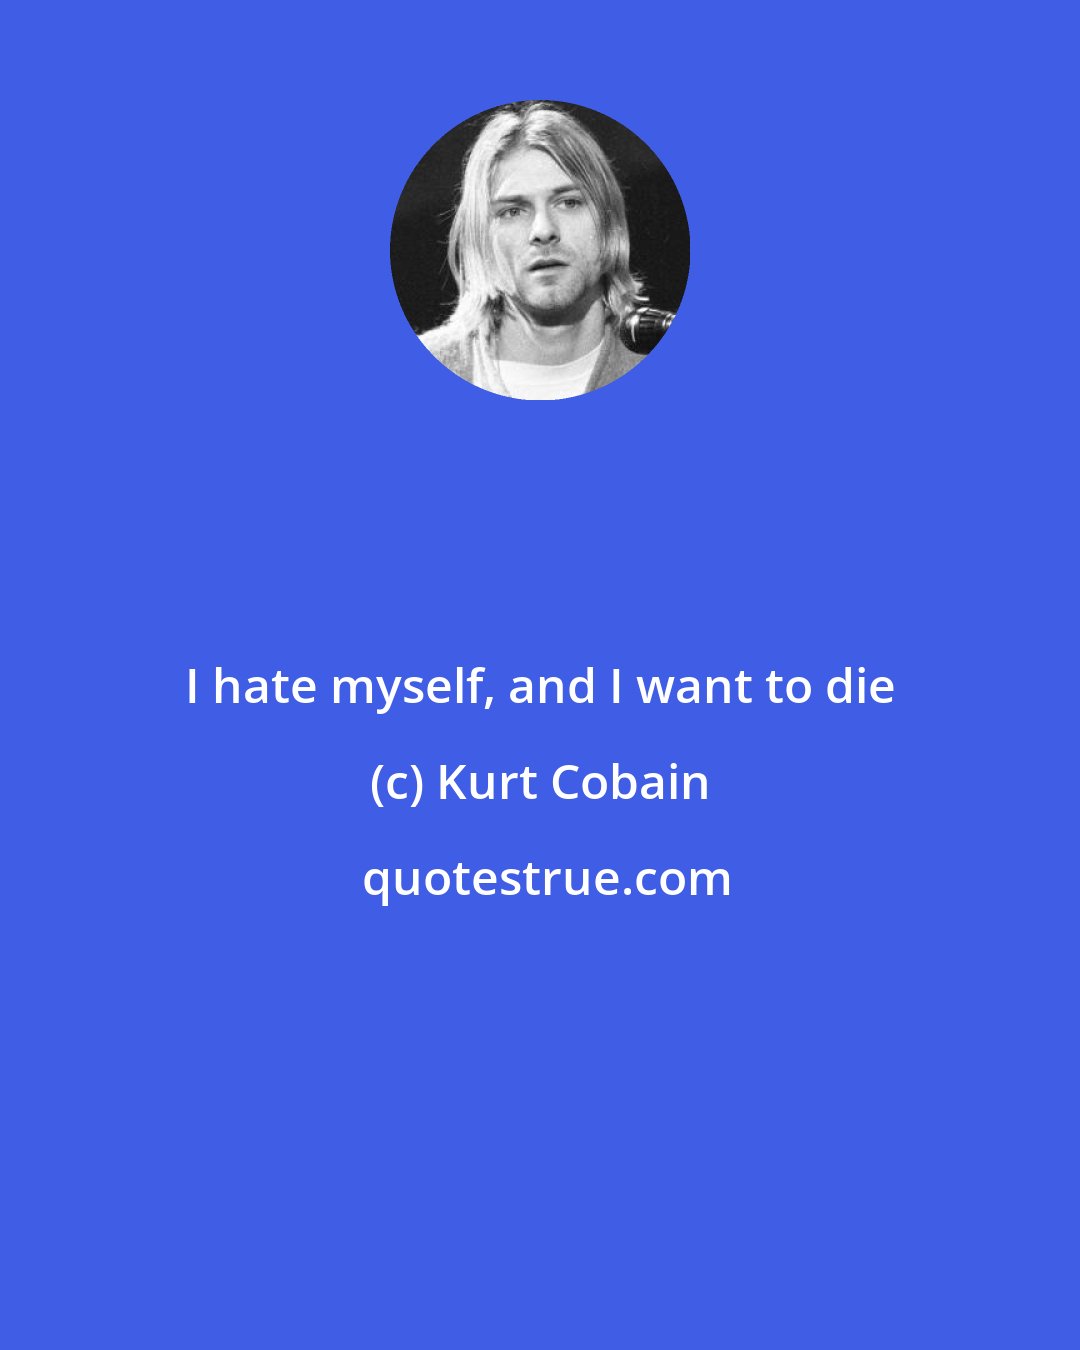 Kurt Cobain: I hate myself, and I want to die